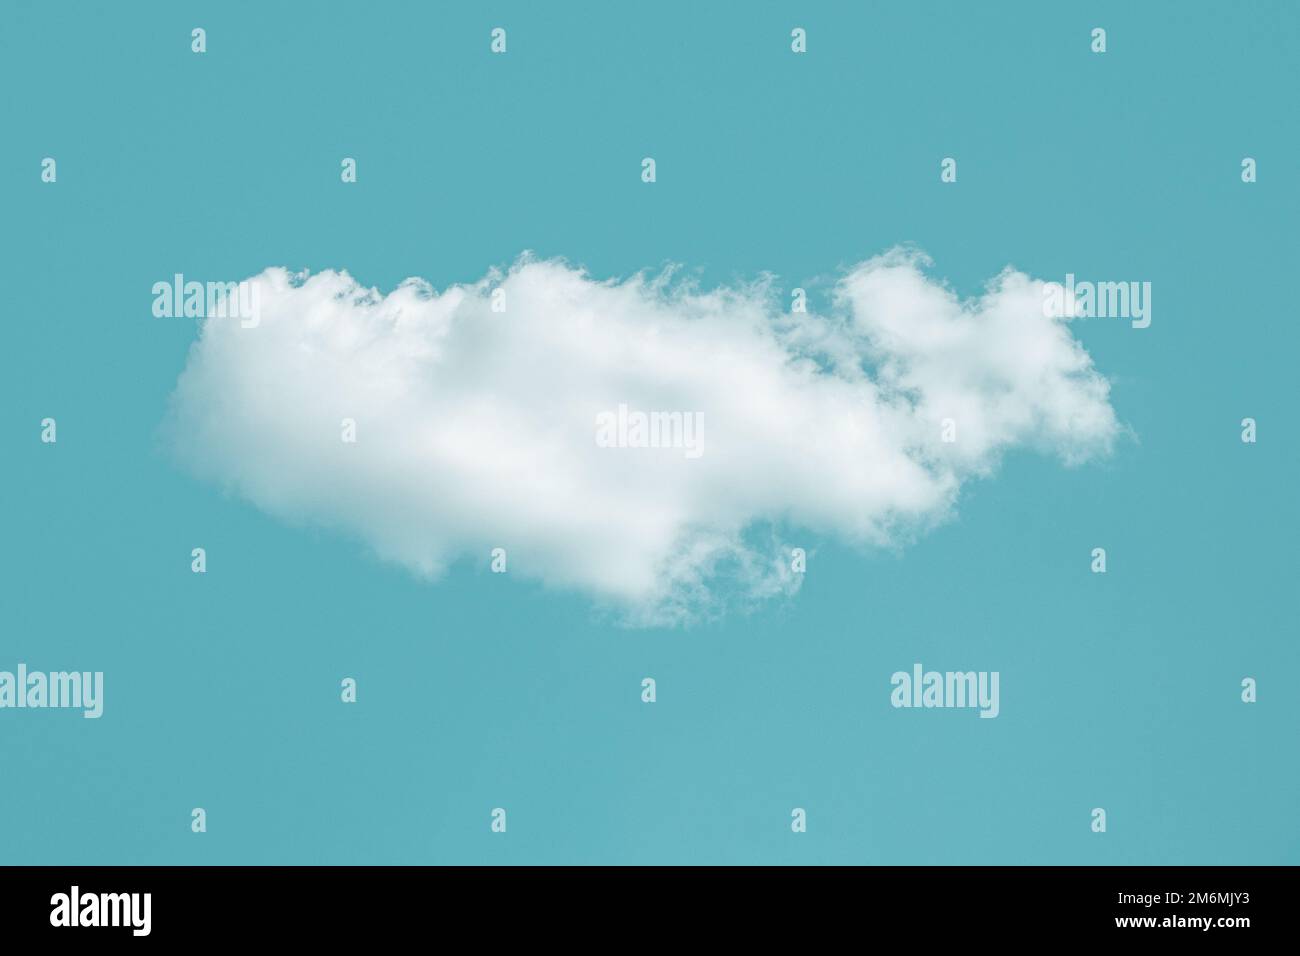 One white cloud in blue sky, dream like idyllic cloudscape, copy space Stock Photo